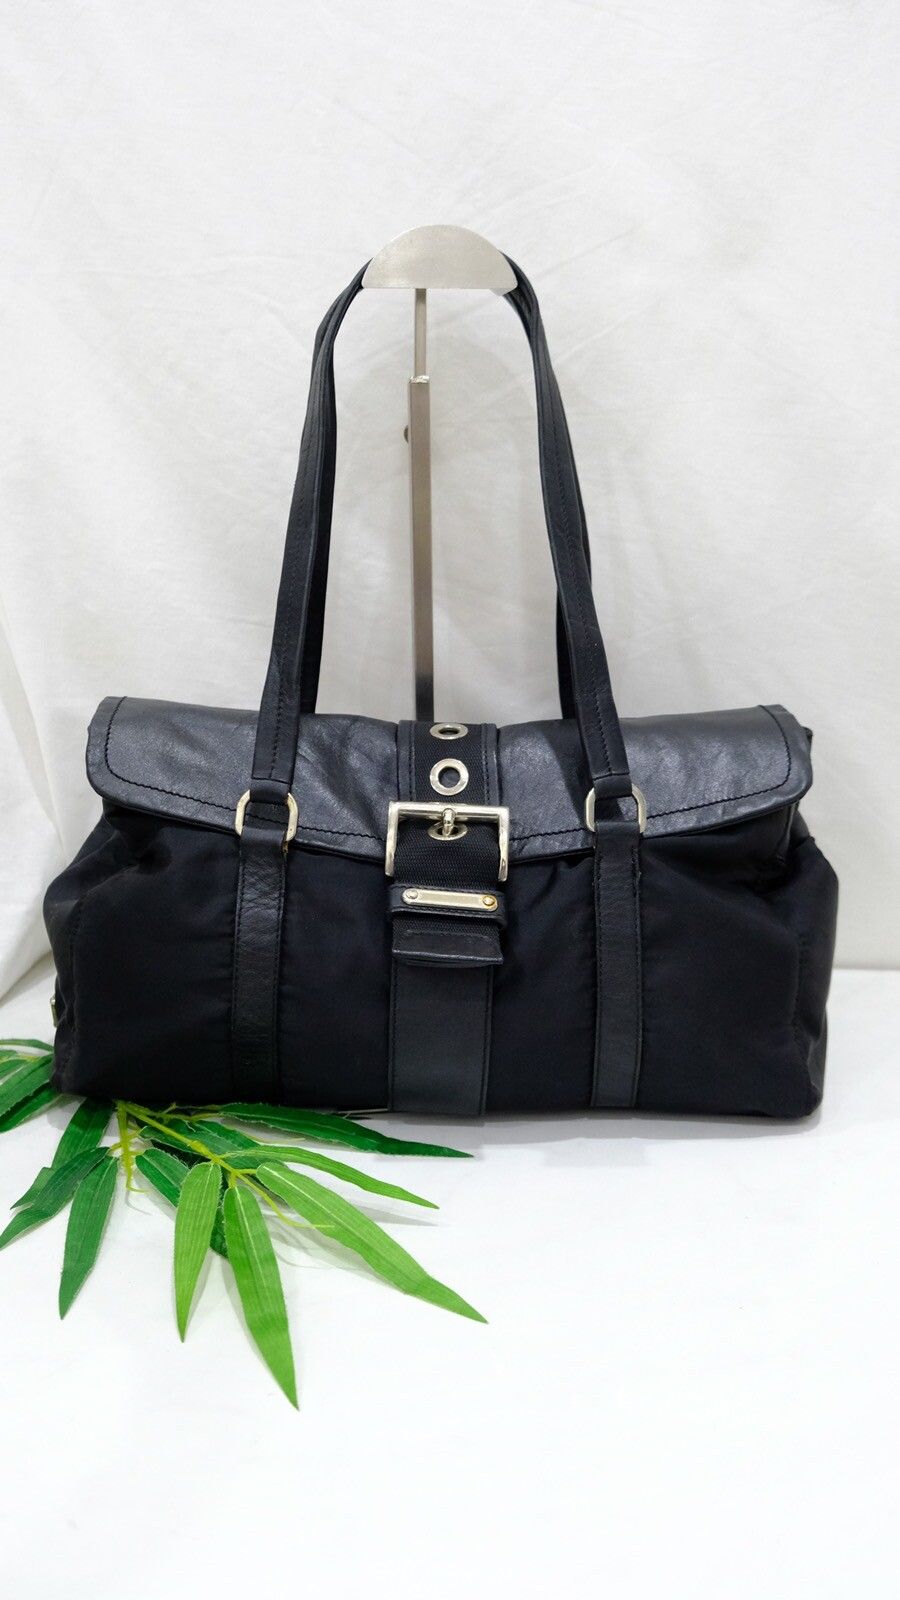 Authentic Black Prada handbag leather and nylon - 2